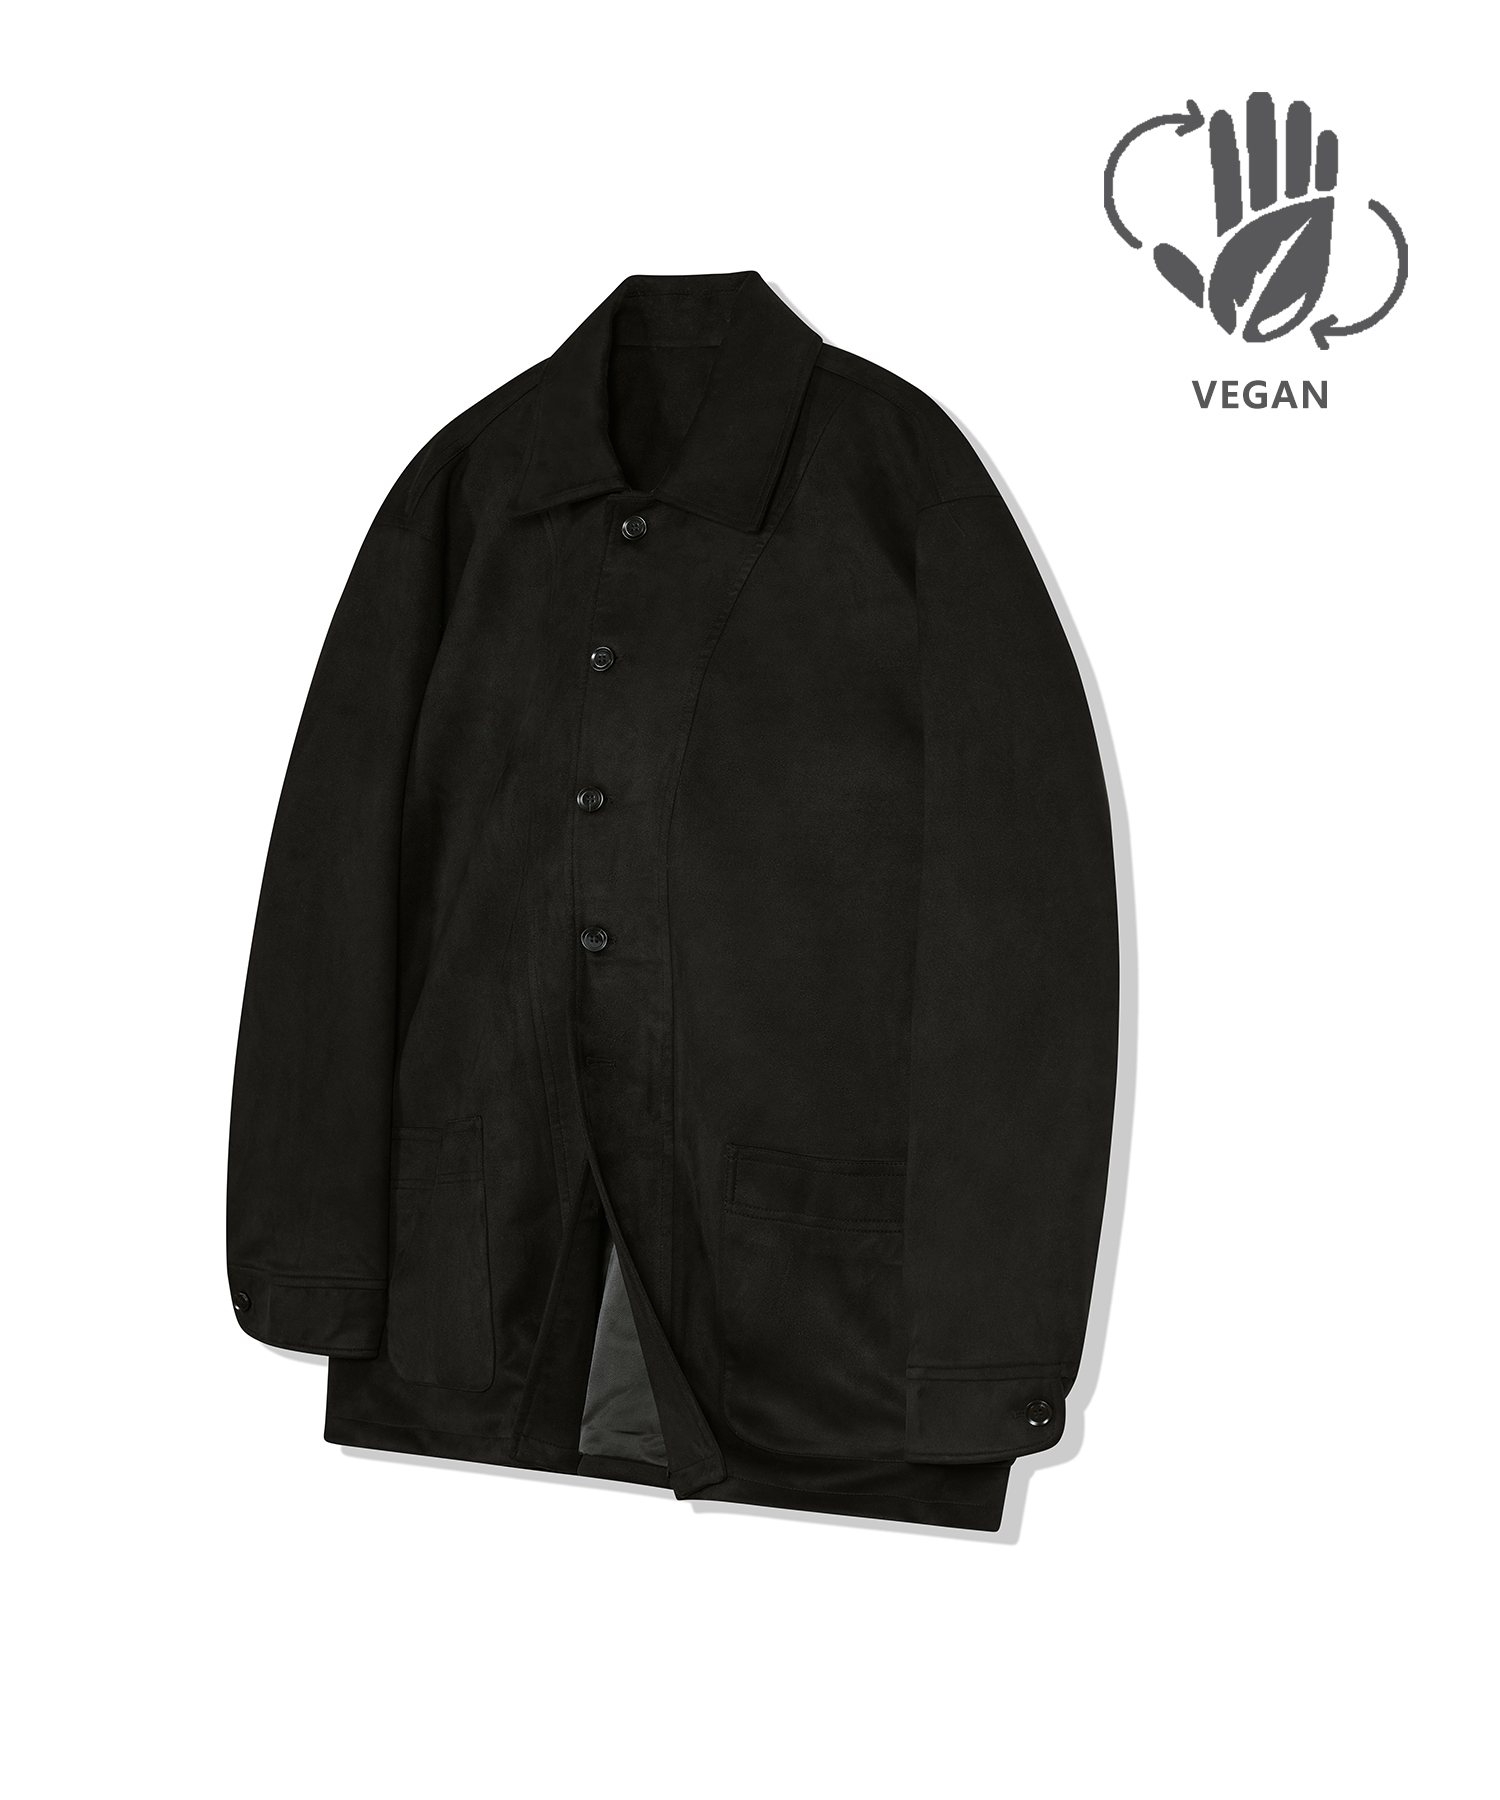 87-STAN033 [Vegan Suede] Bold Y-Stitch Suede Jacket Black